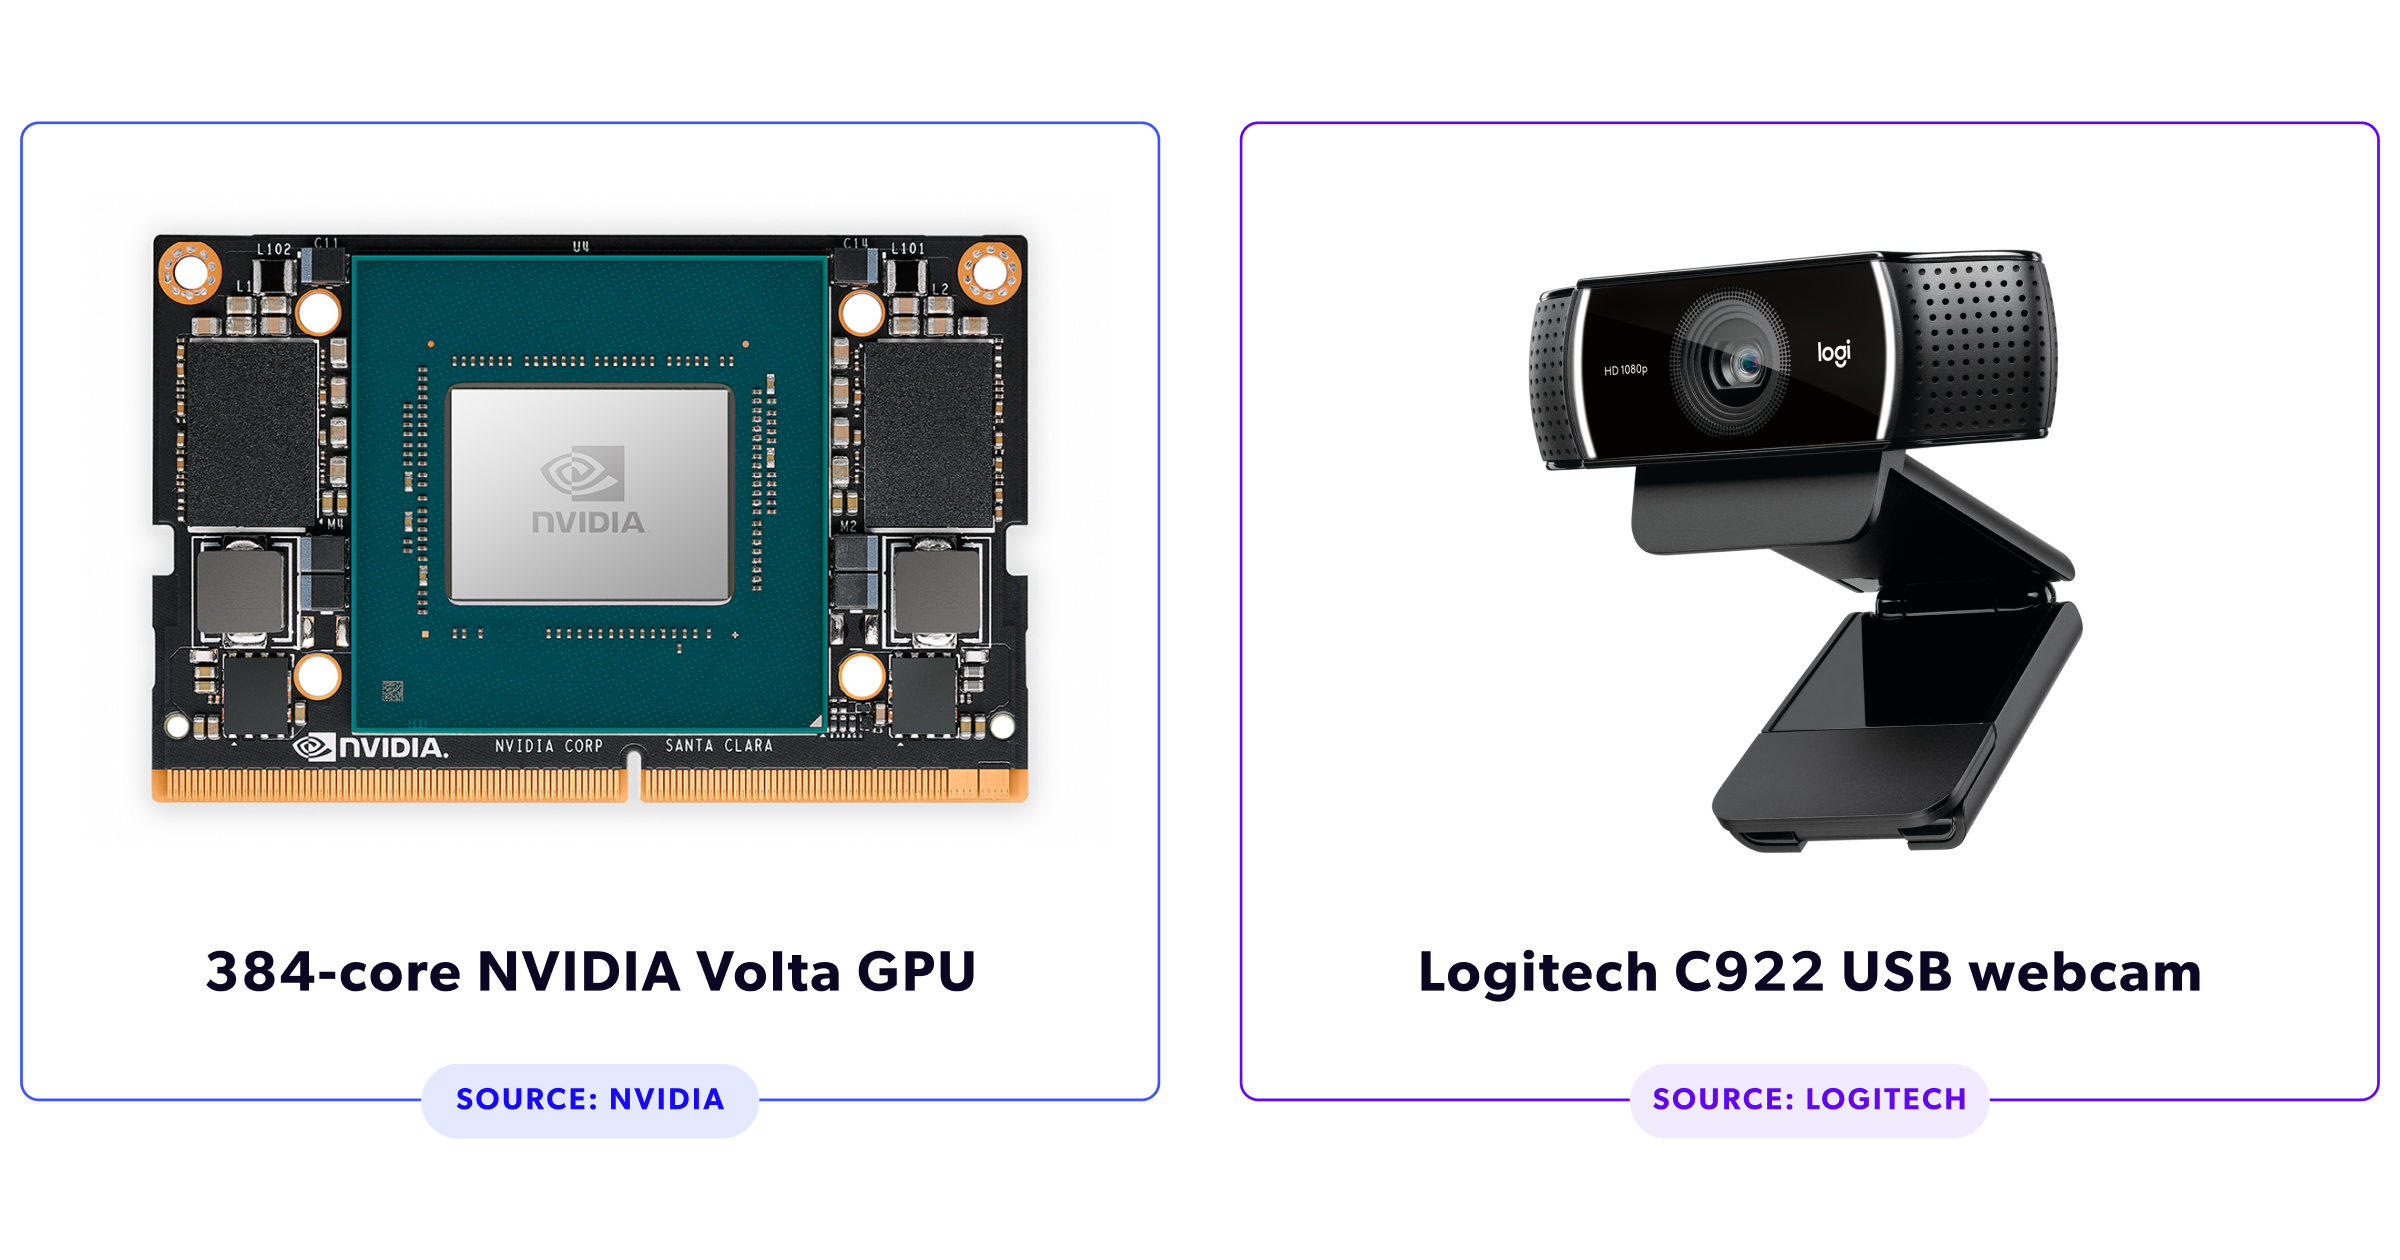 Image of NVIDIA Jetson Xavier NX device, and image og a Logitech C922 USB webcam.